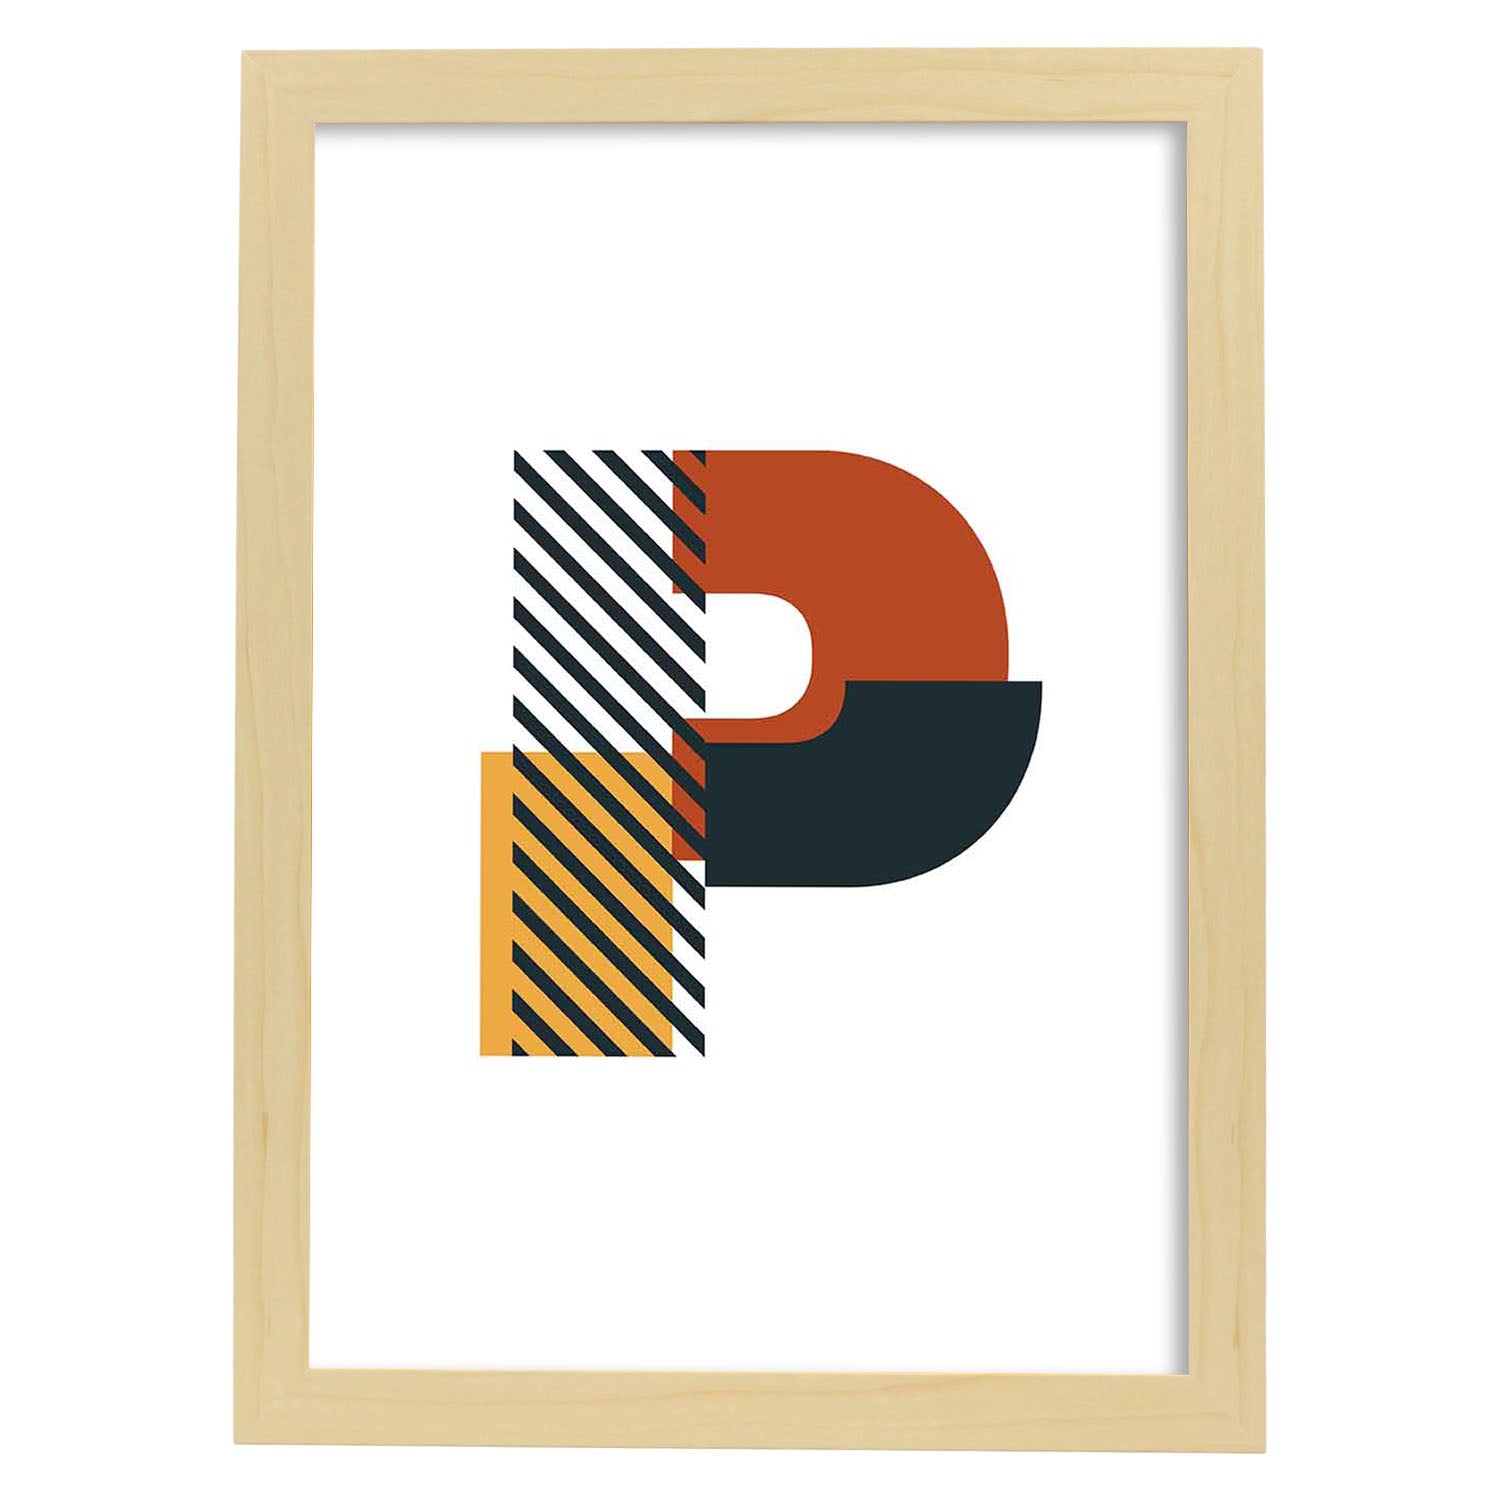 Poster de letra P. Lámina estilo Geometria con imágenes del alfabeto.-Artwork-Nacnic-A4-Marco Madera clara-Nacnic Estudio SL